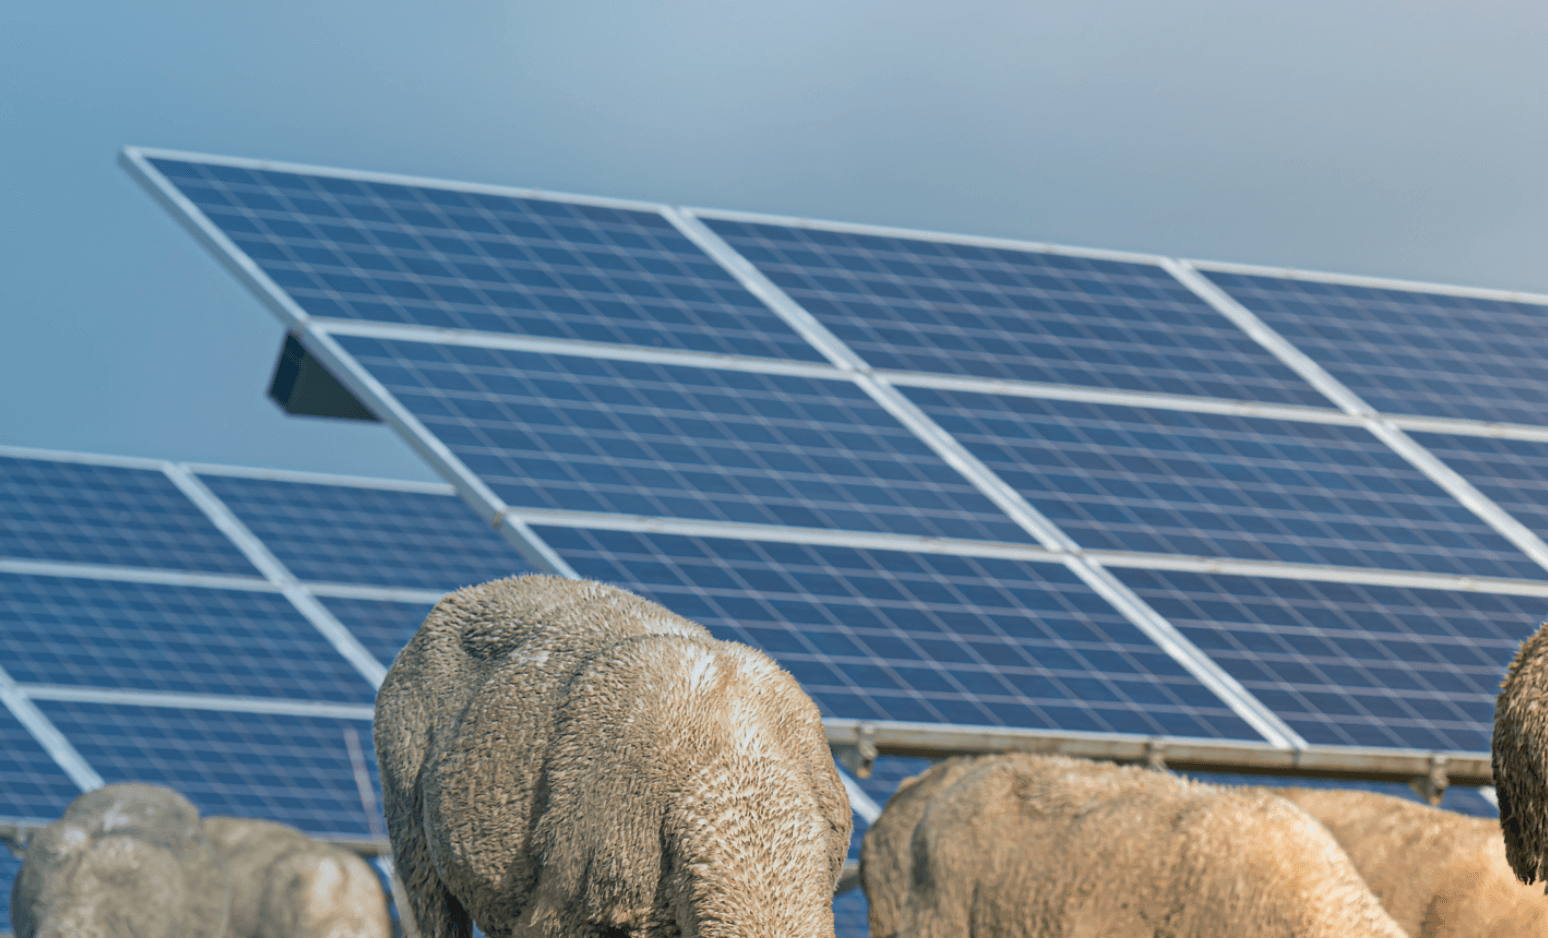 Solar-animal husbandry complementation